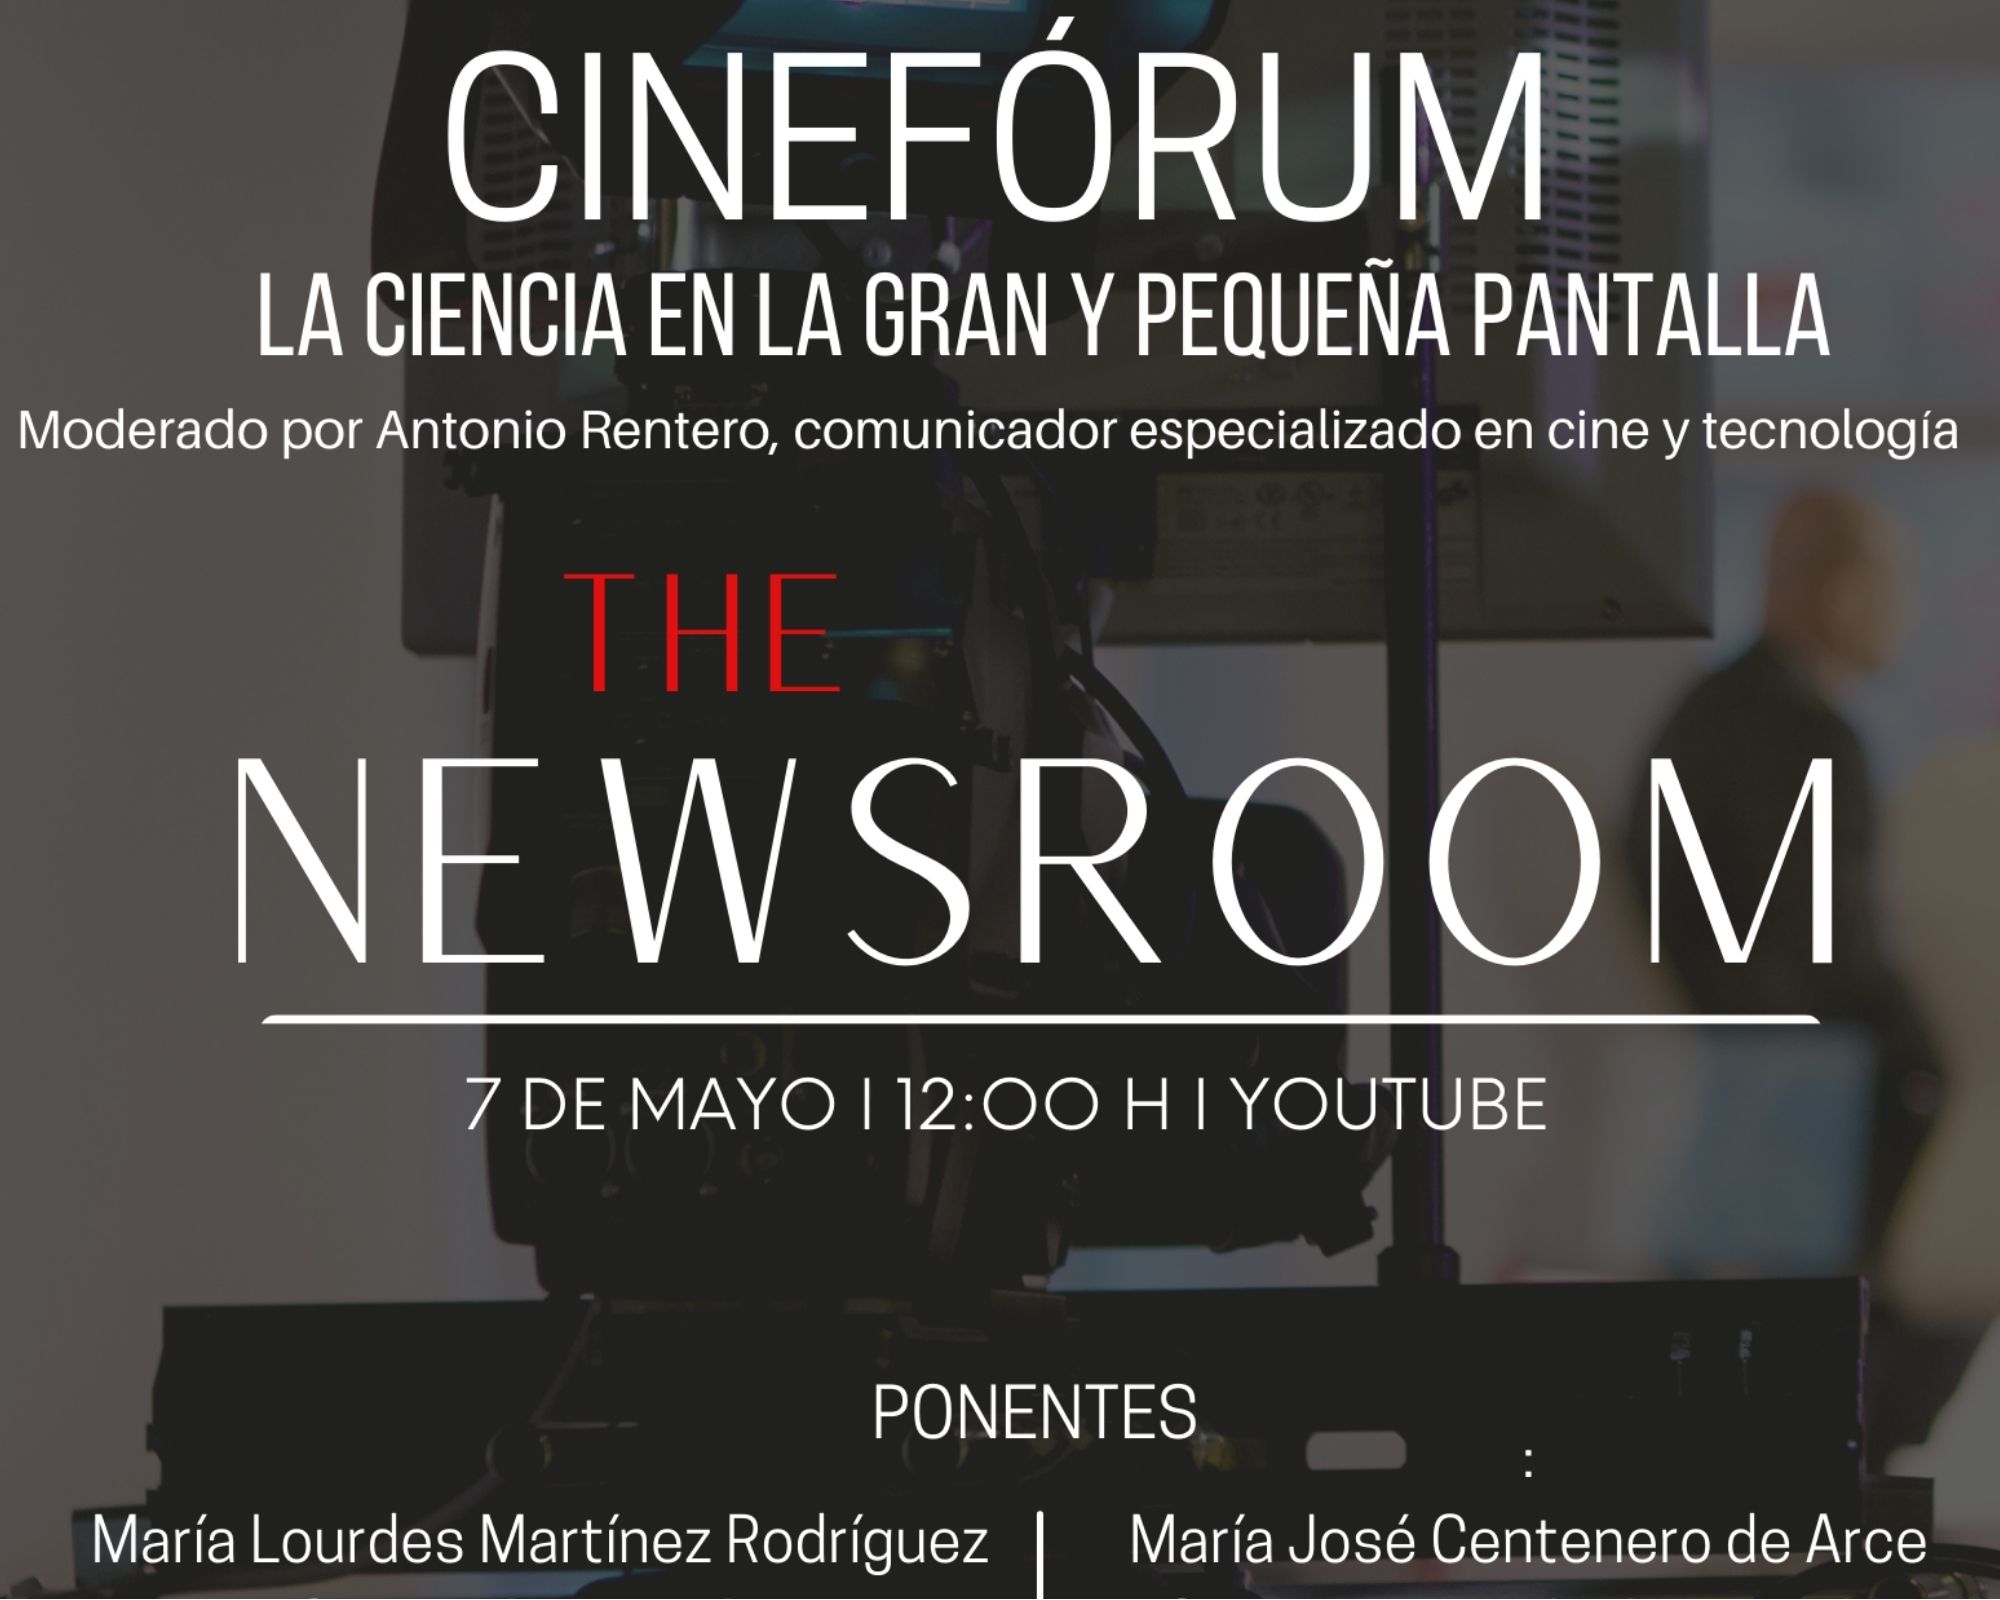 Nuevo cinefórum The Newsroom